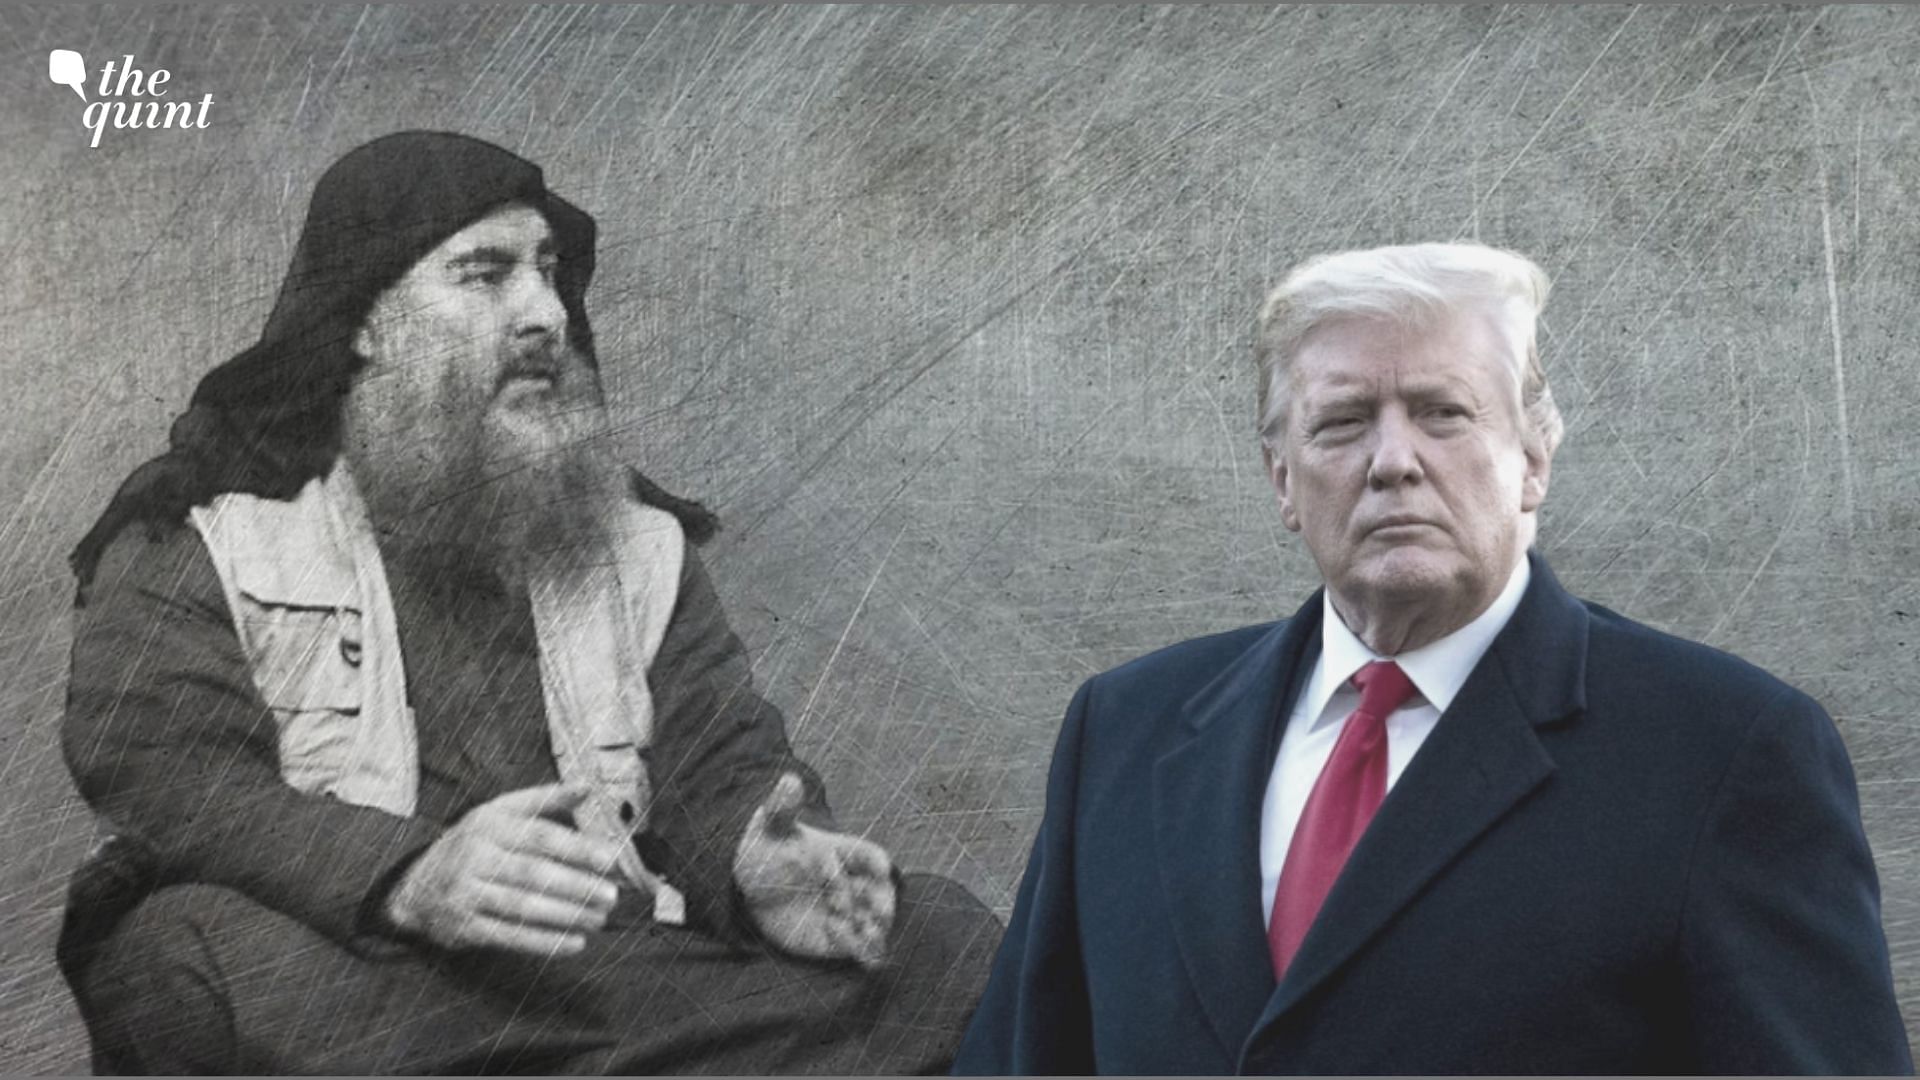 ISIS leader Abu Bakr al-Baghdadi and US President Donald Trump.